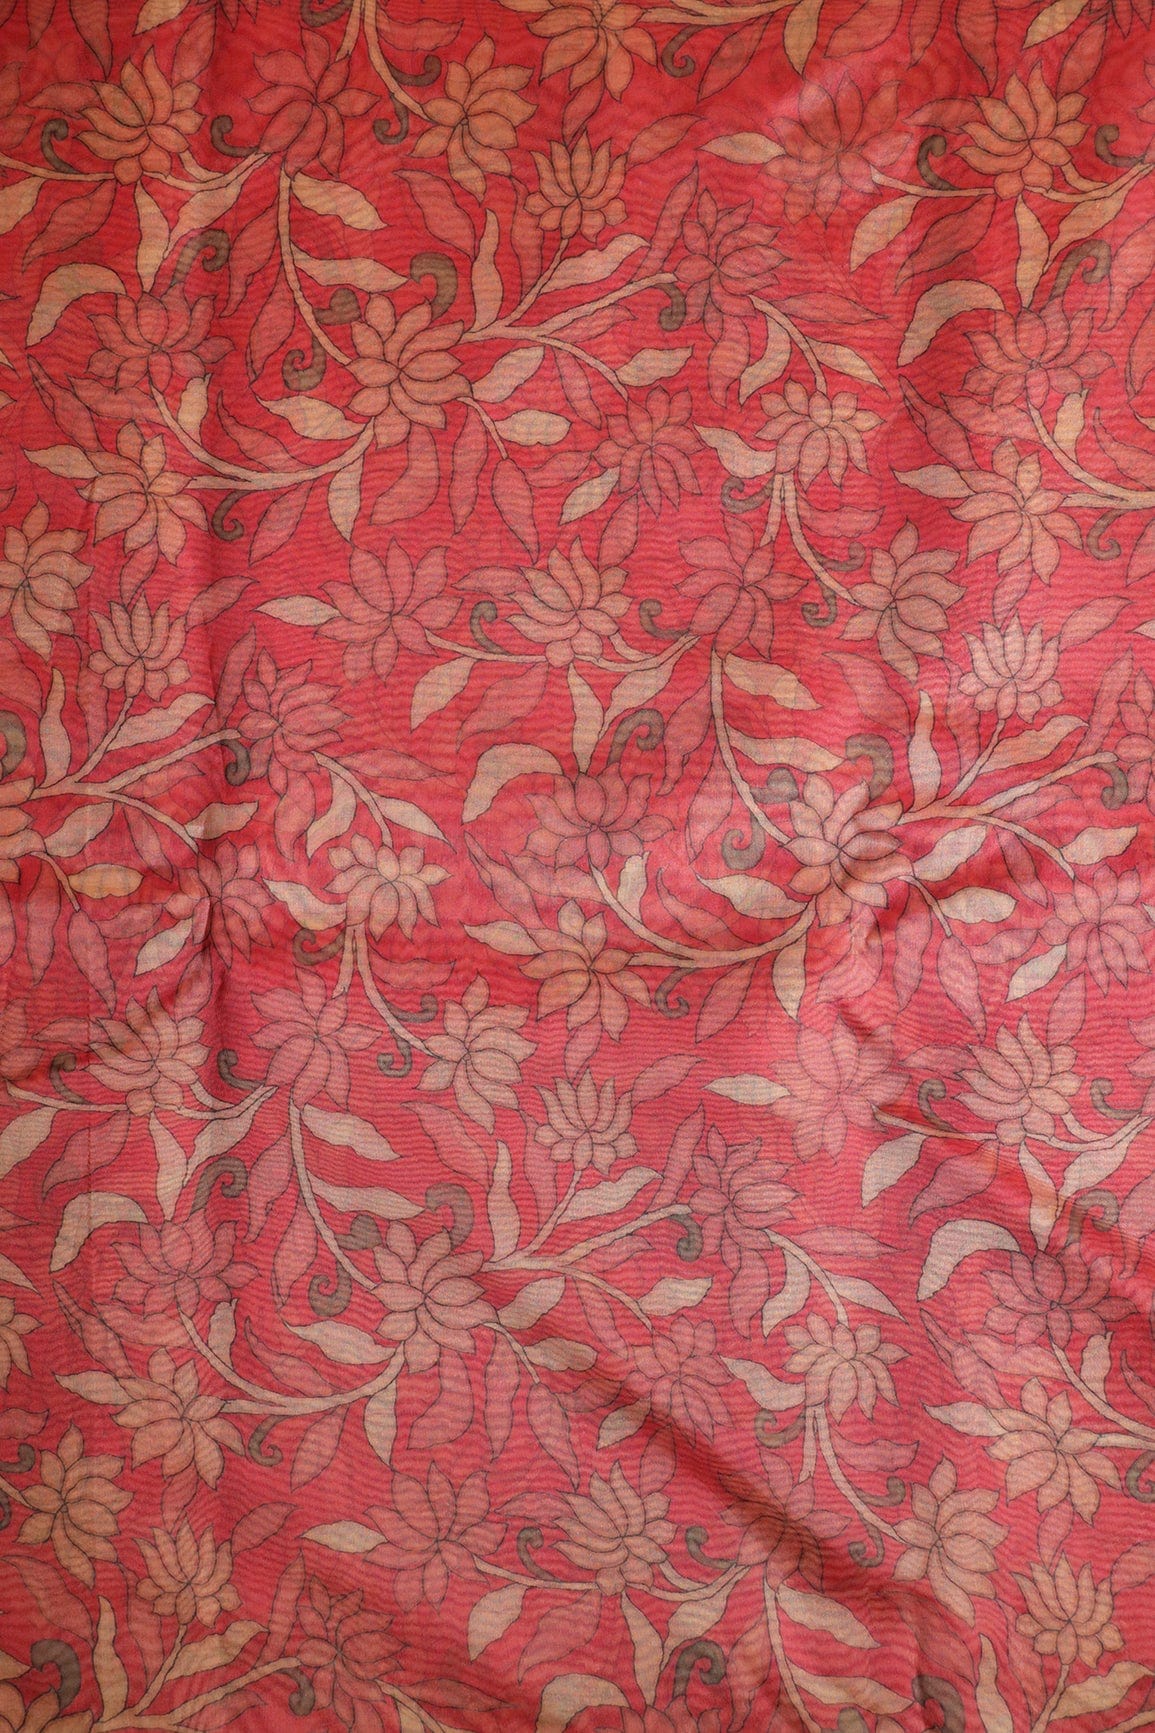 doeraa Prints Red And Beige Floral Digital Print On Maroon Organza Fabric